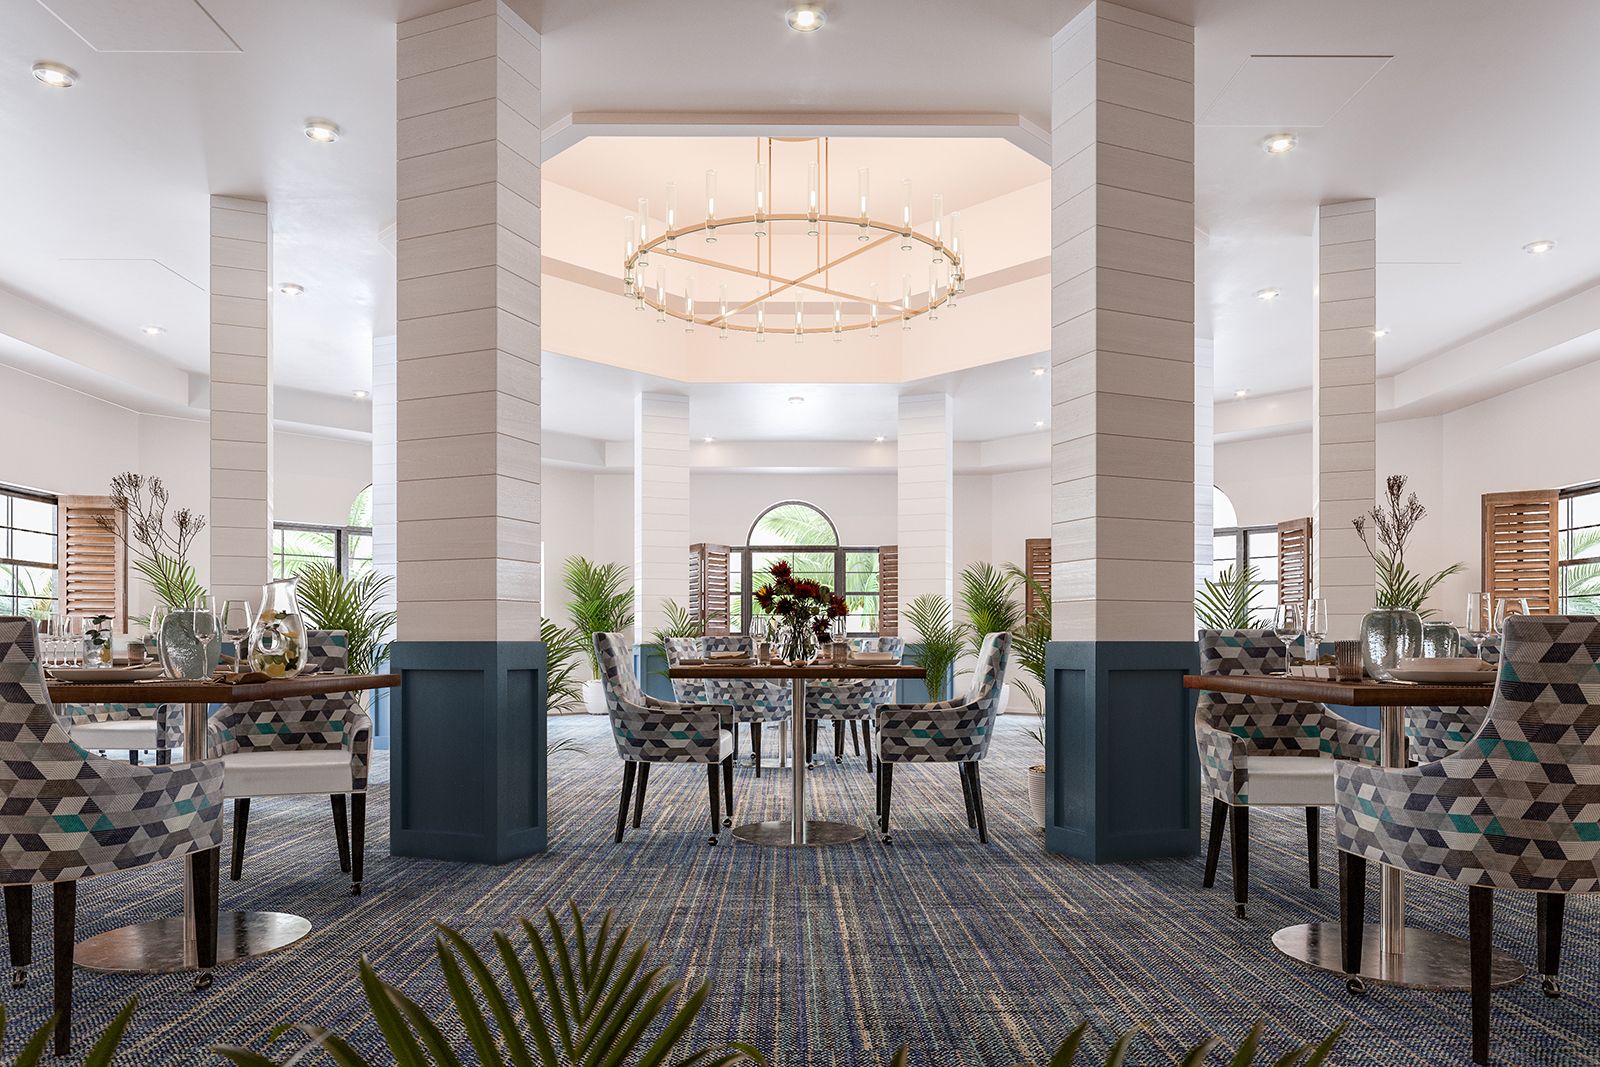 Interior view of Unisen Senior Living featuring elegant dining area with modern decor.